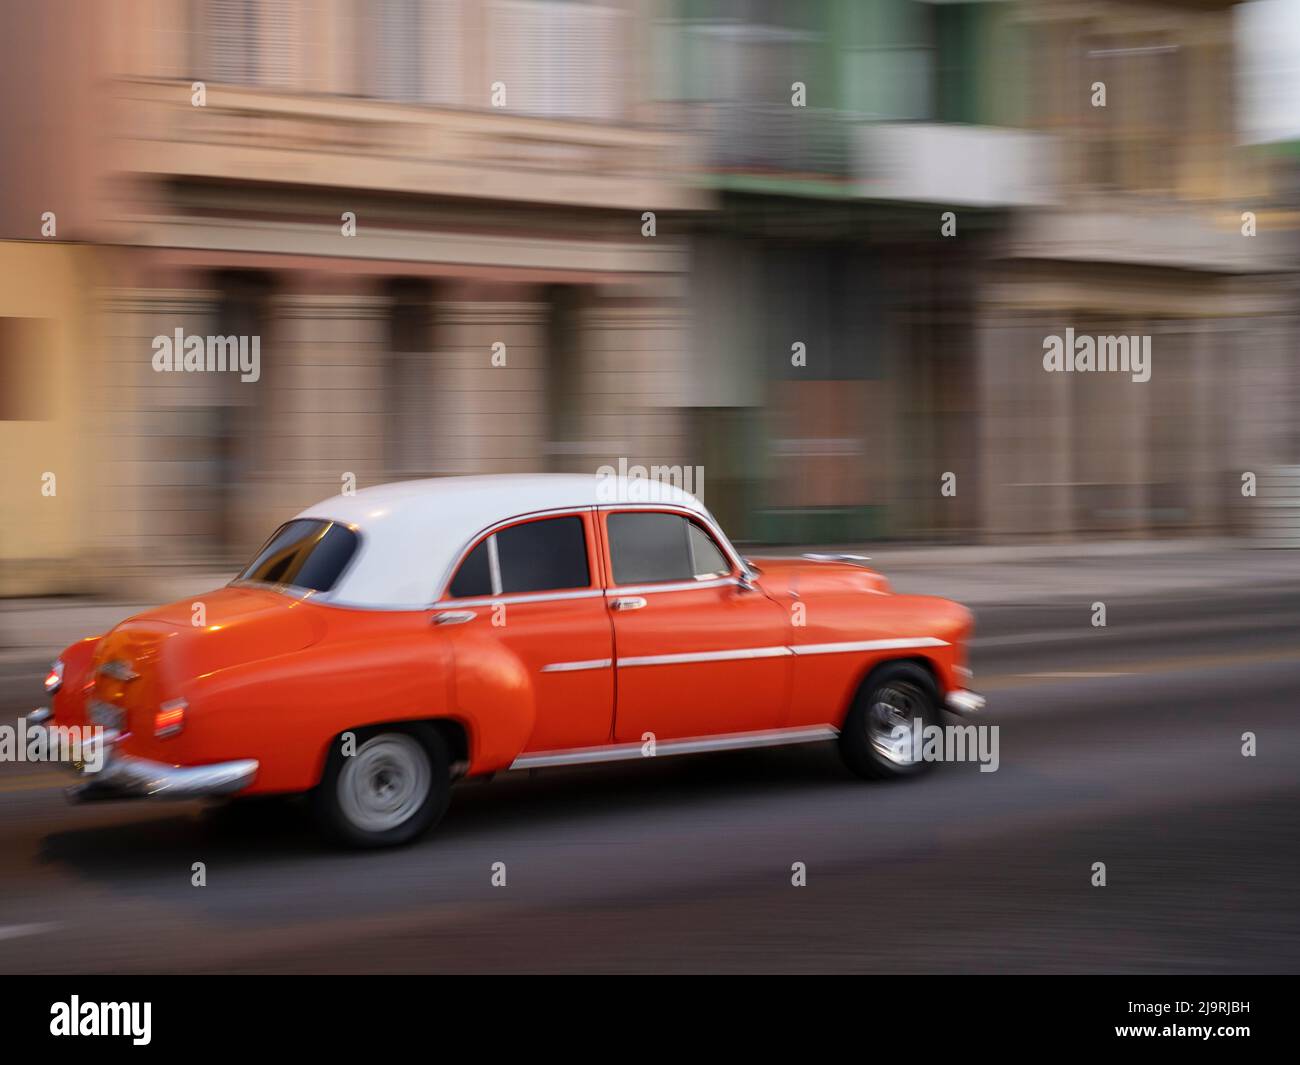 Cuba, Havana, Havana Vieja, UNESCO World Heritage Site, classic red car in motion Stock Photo